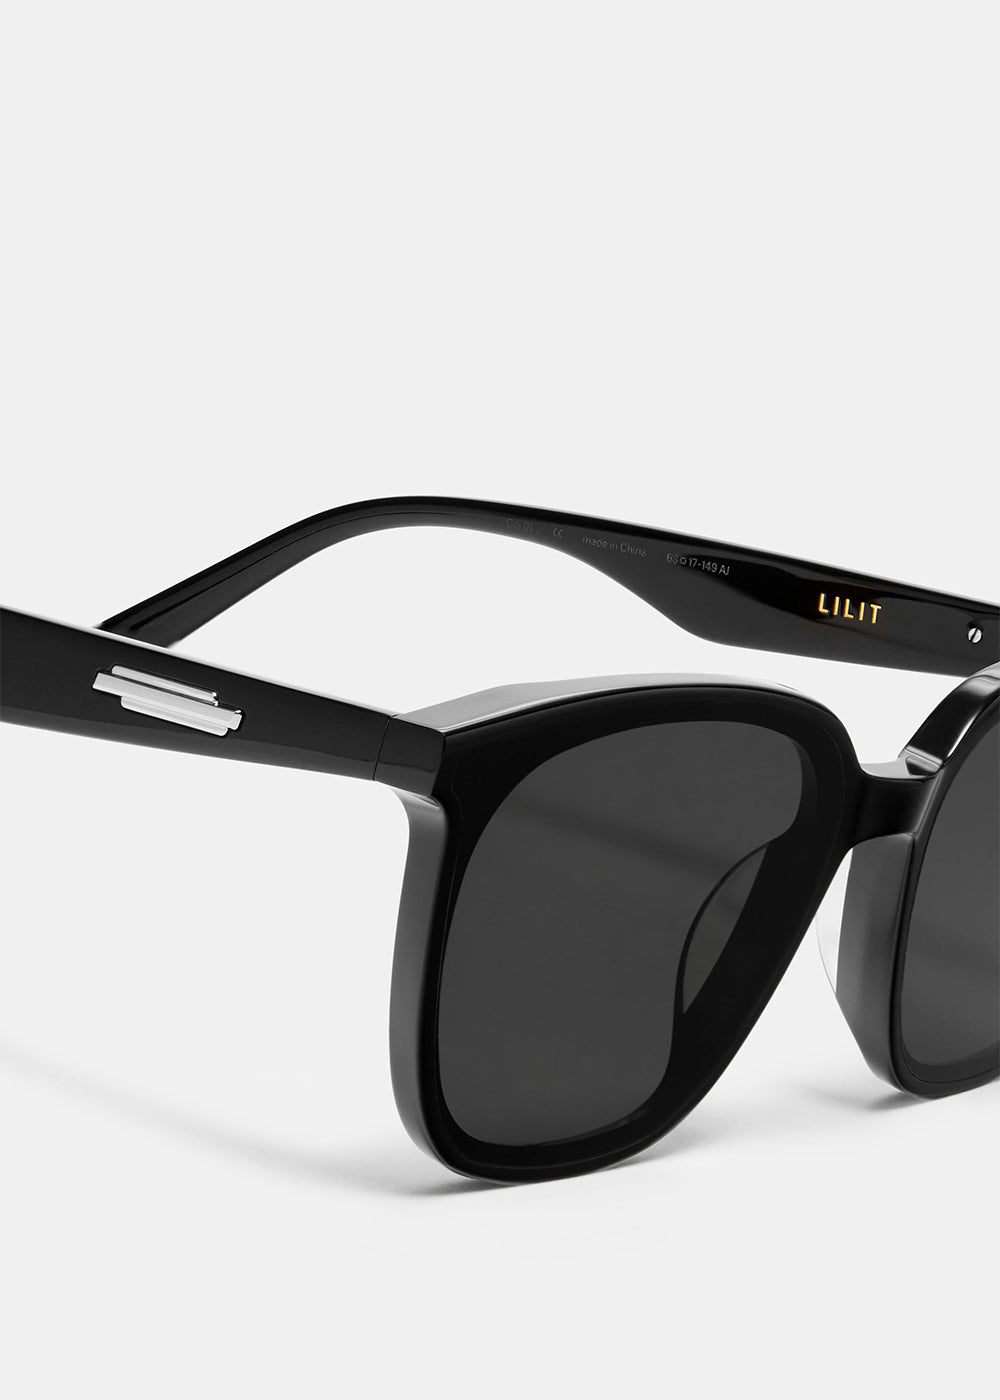 LILIT-01 Sunglasses | LEISURE CENTER